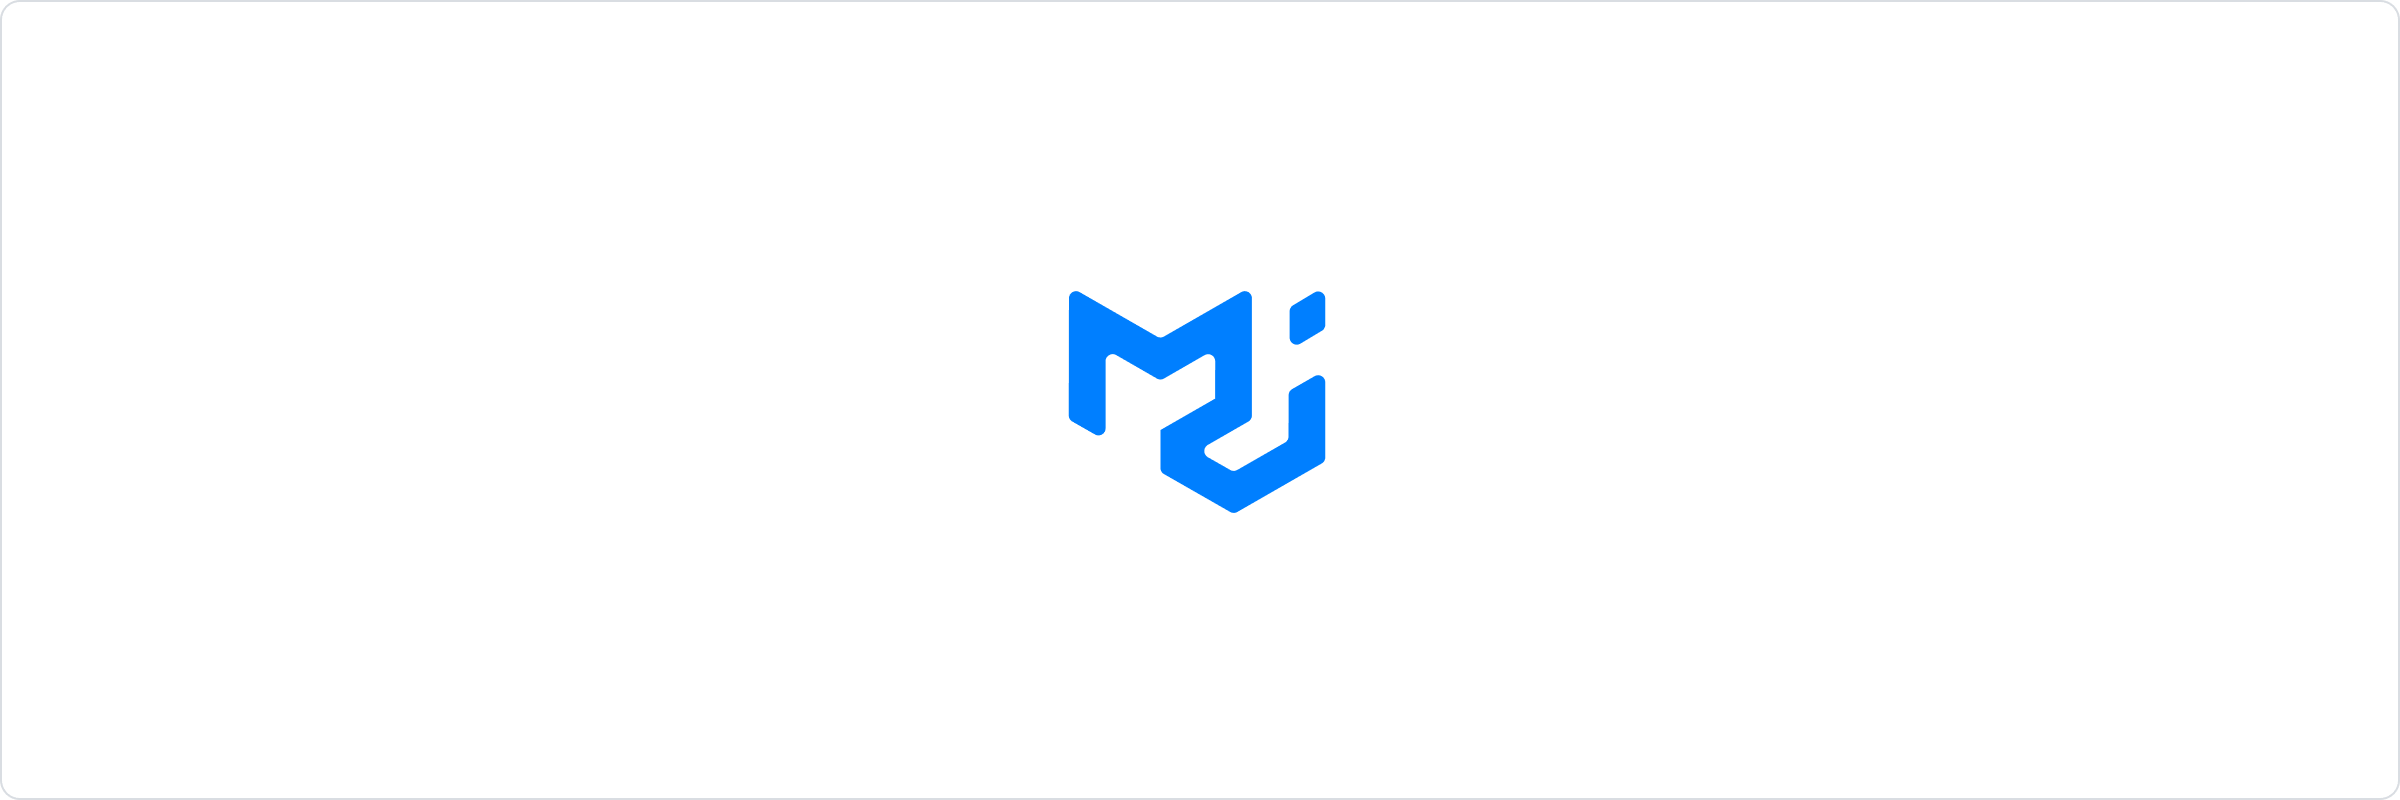 The new Material\xa0UI logo